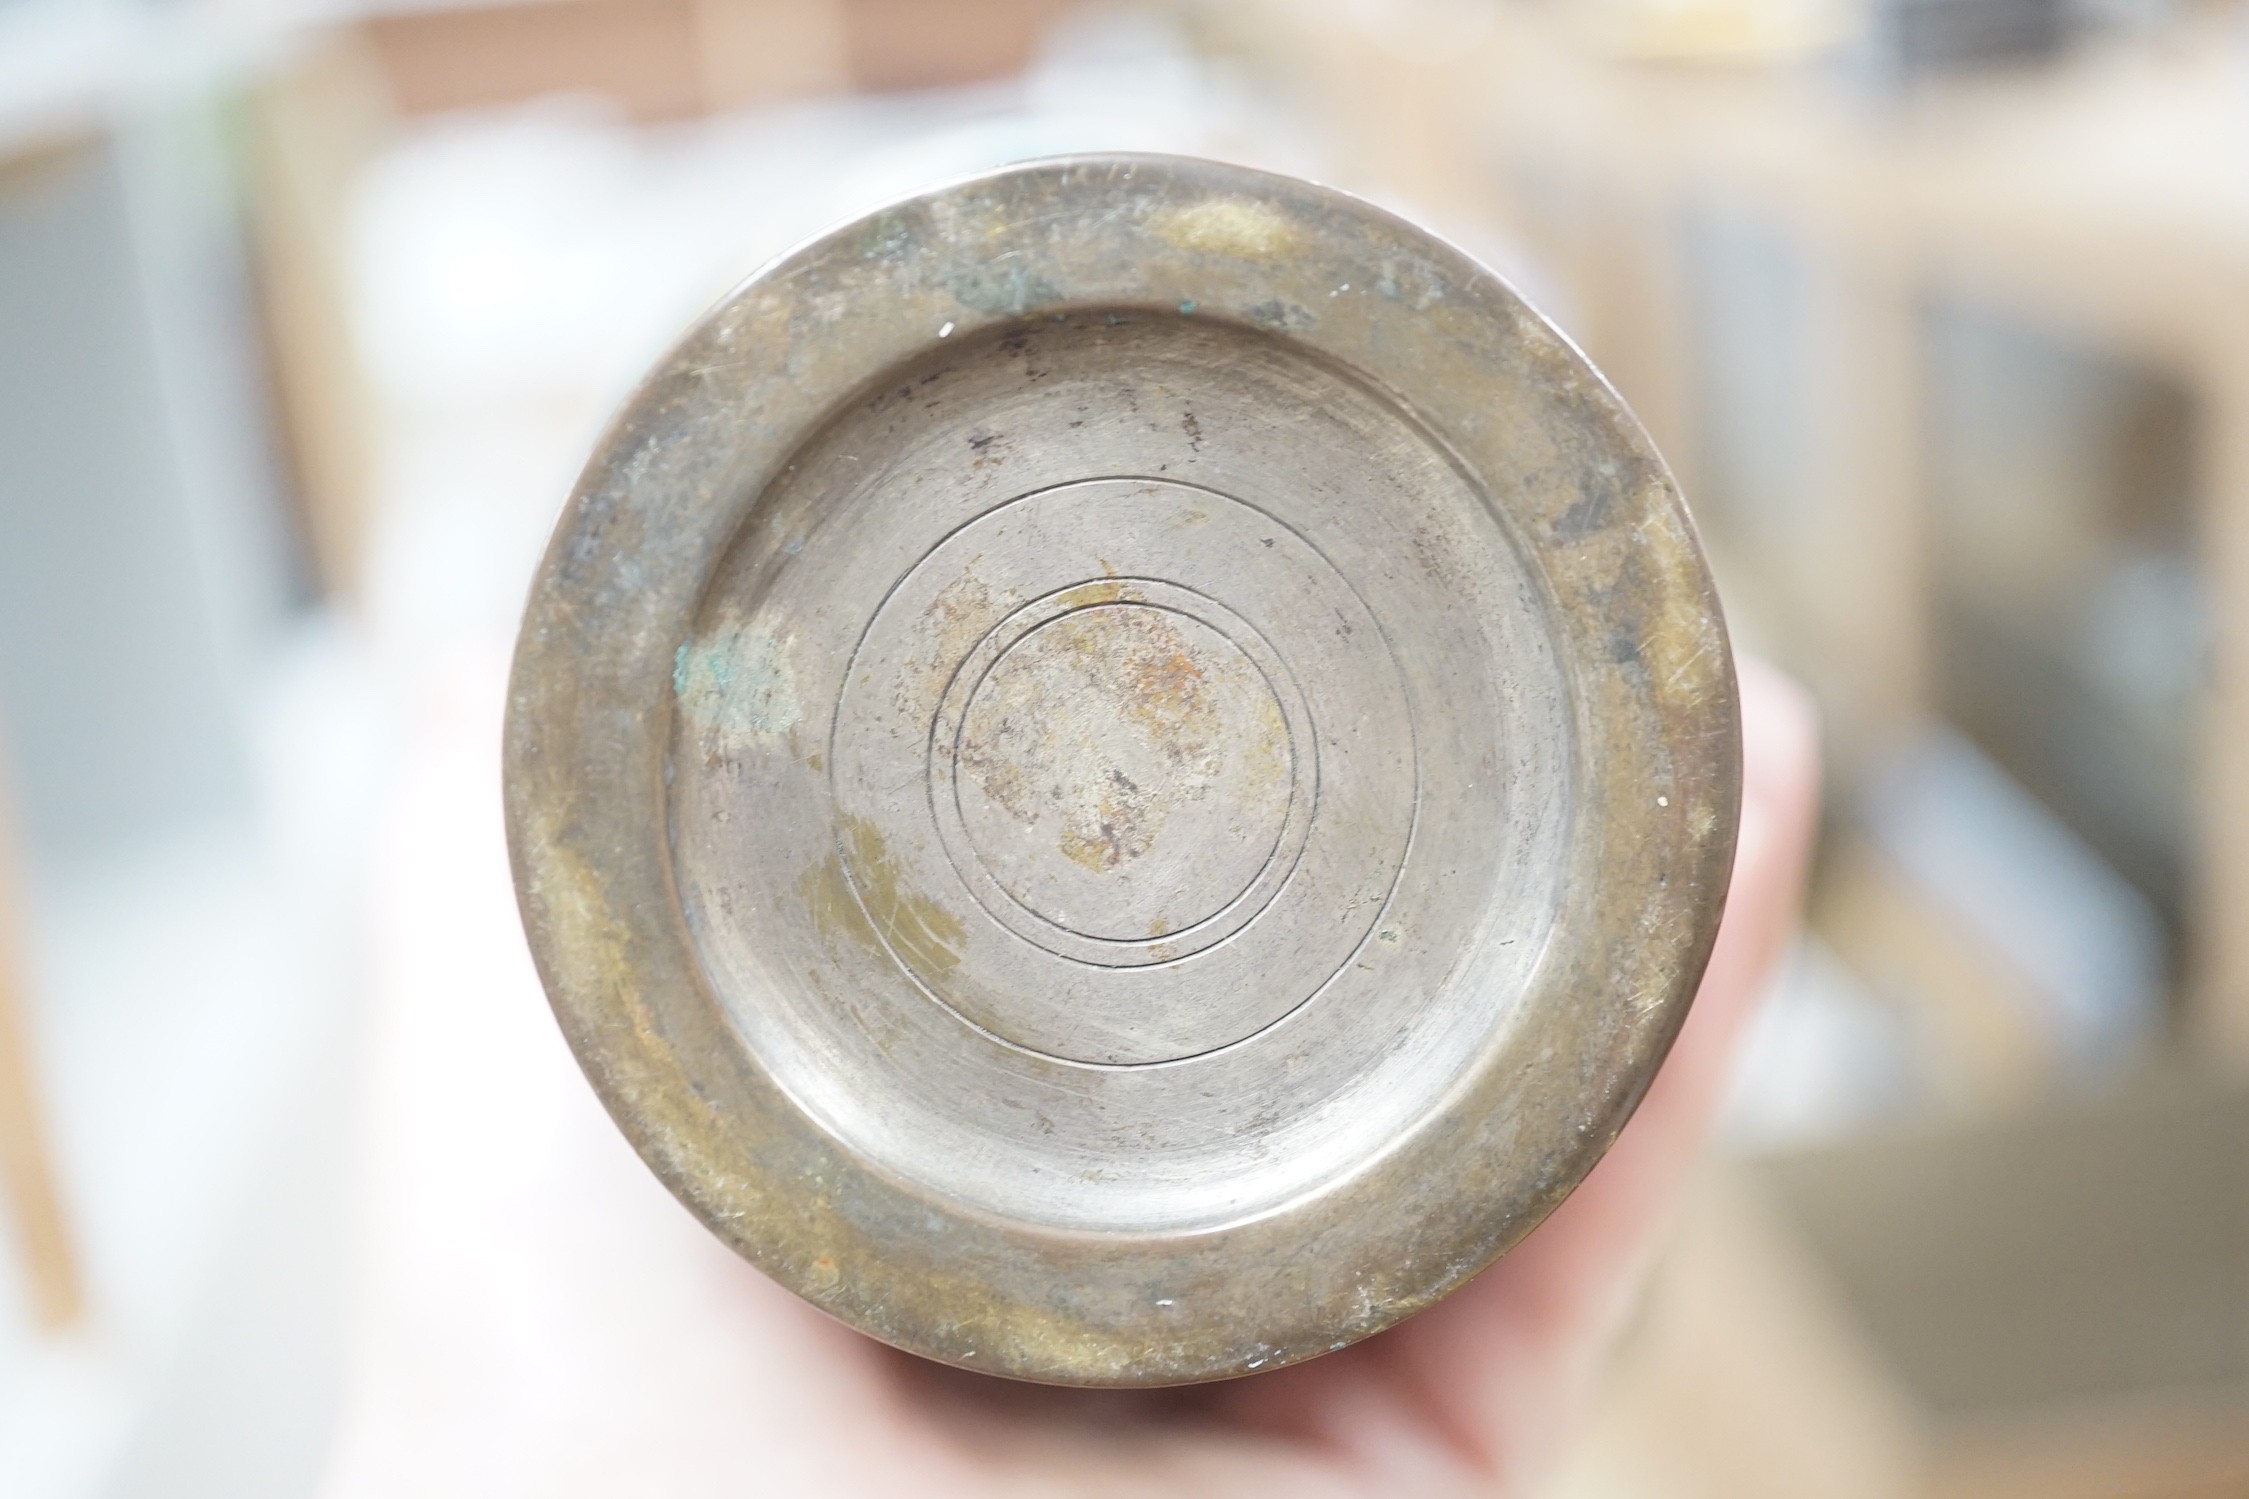 A Japanese cockerel cloisonné enamel vase. 24cm high